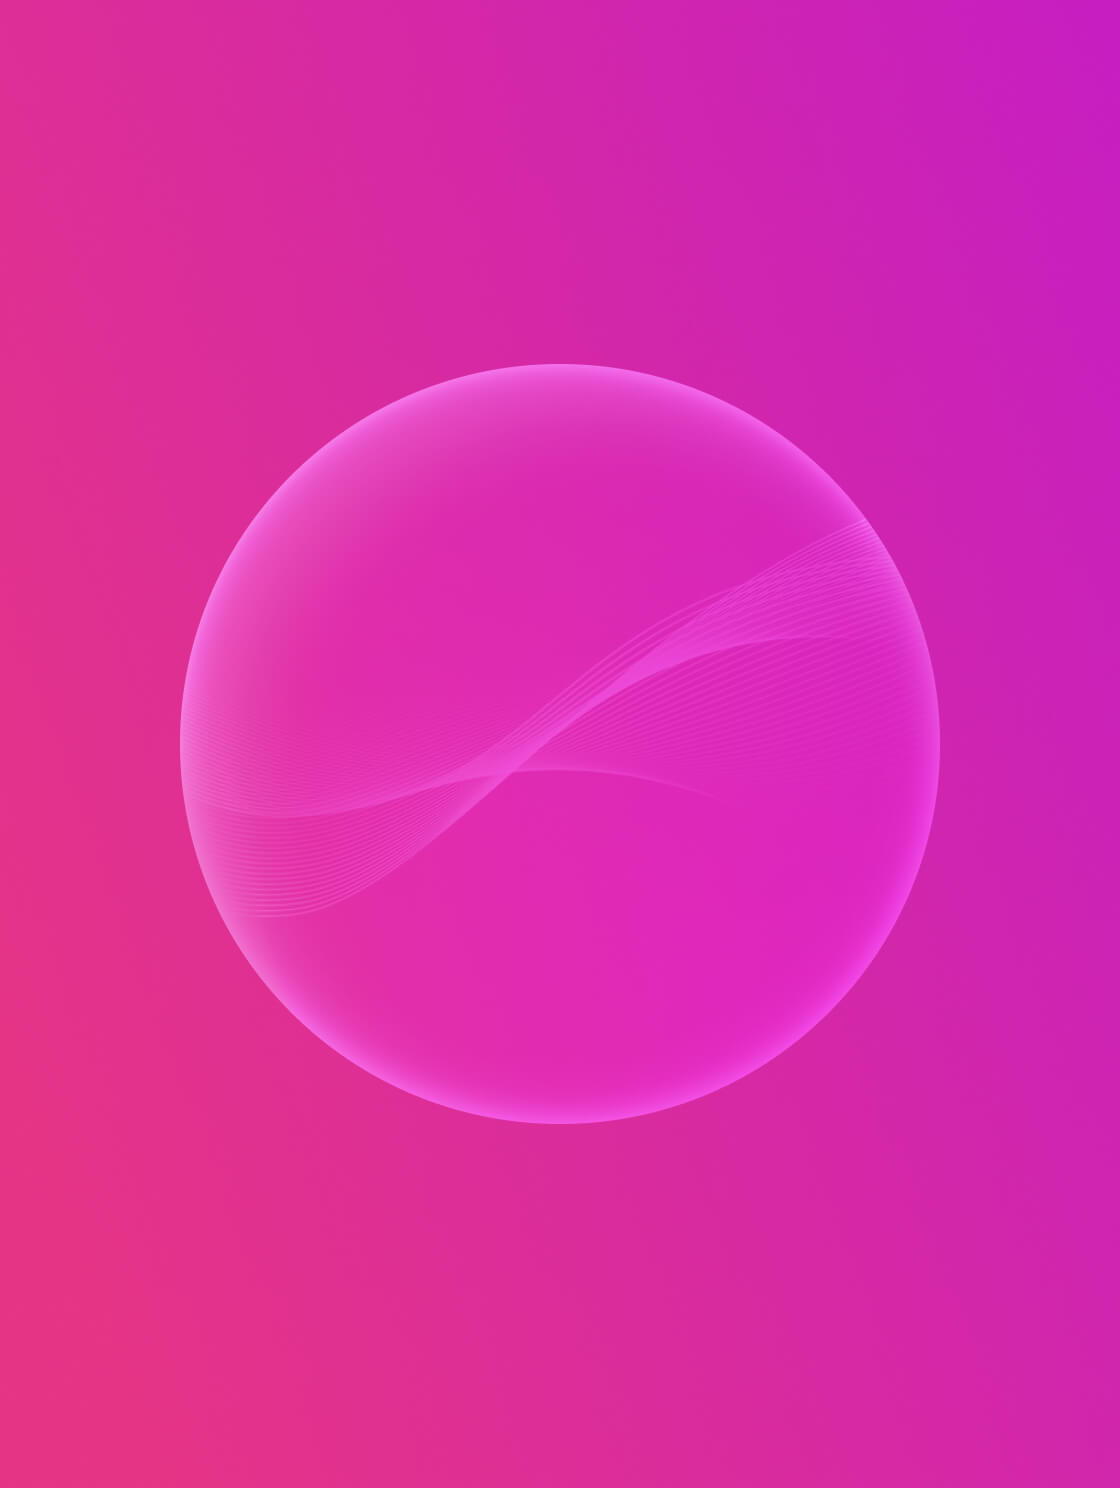 Songclip pink circle design